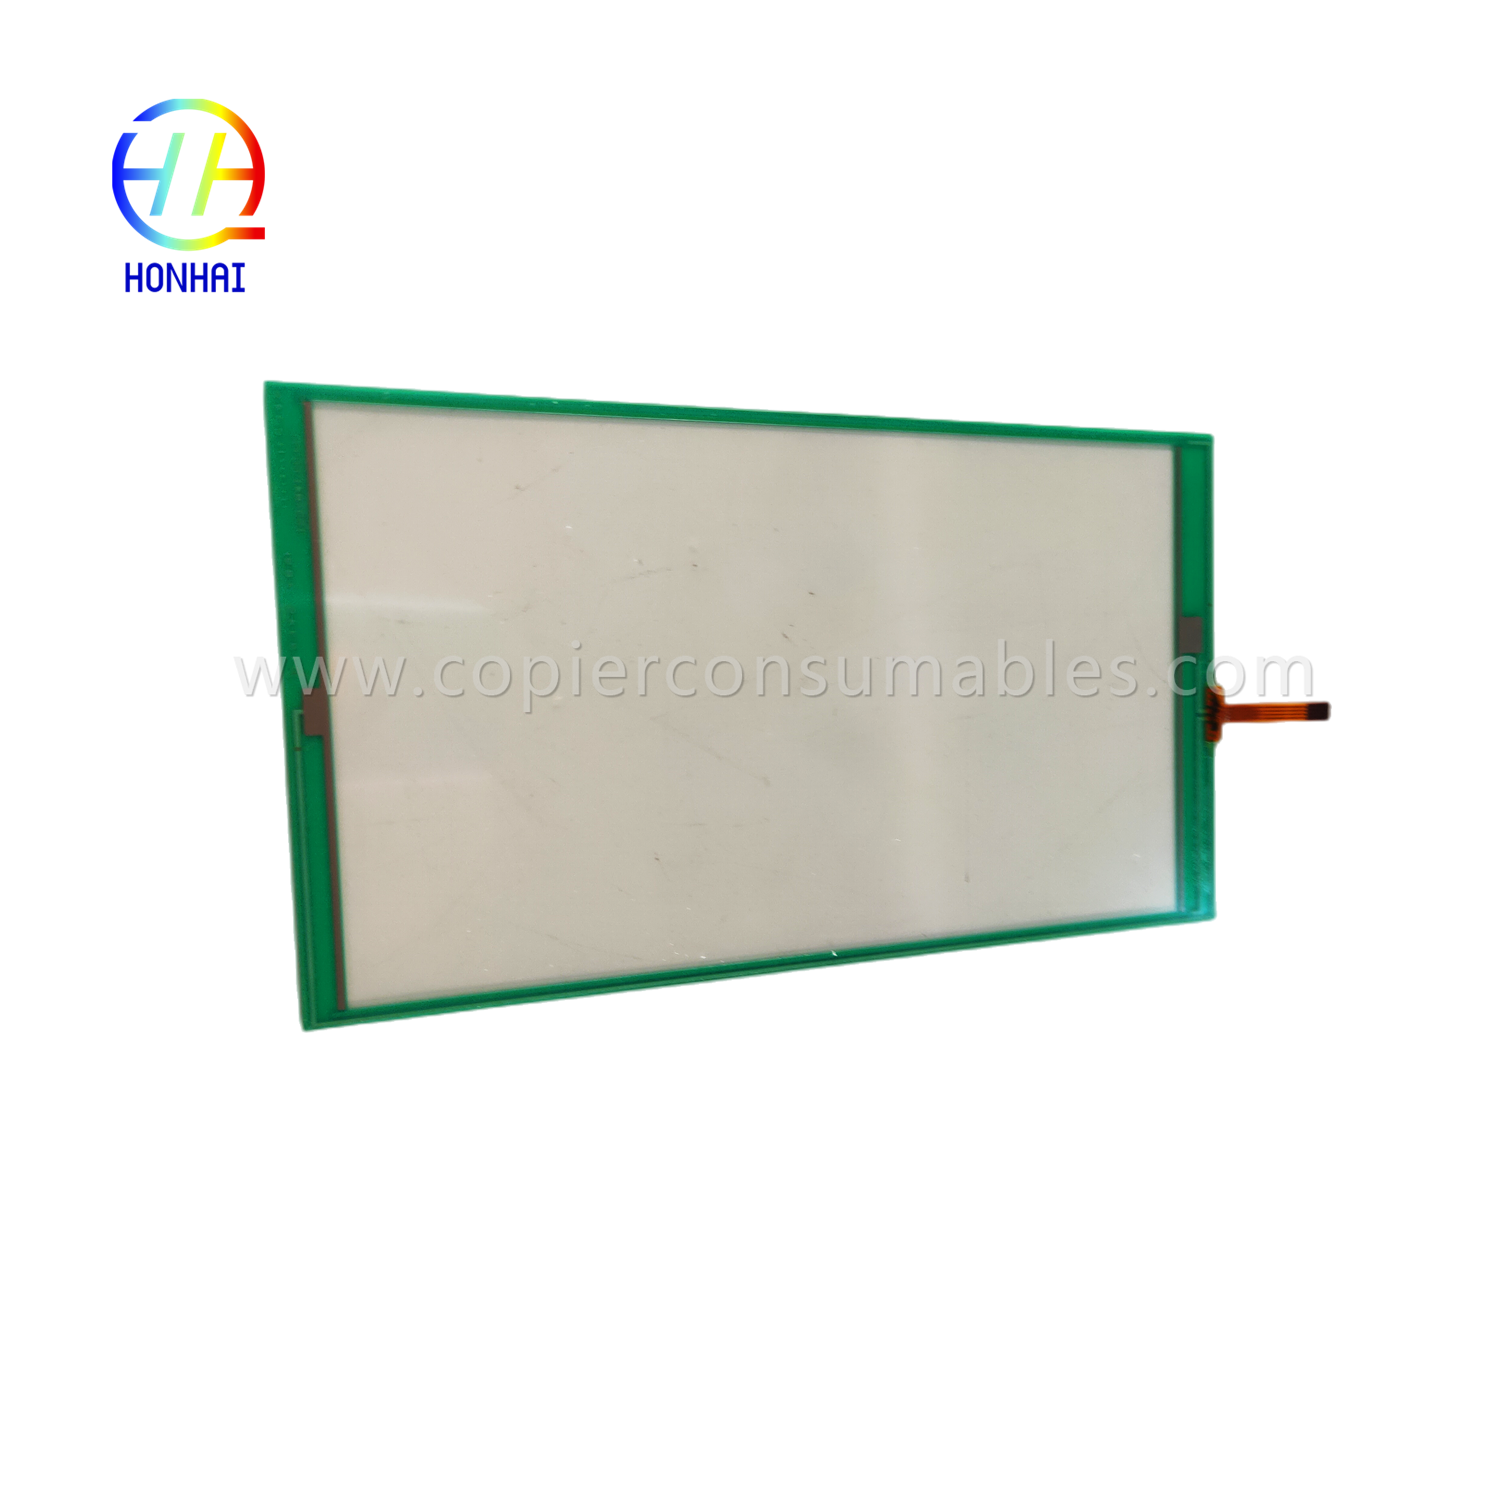 LCD SCREEN for Kyocera taskalfa 8052i